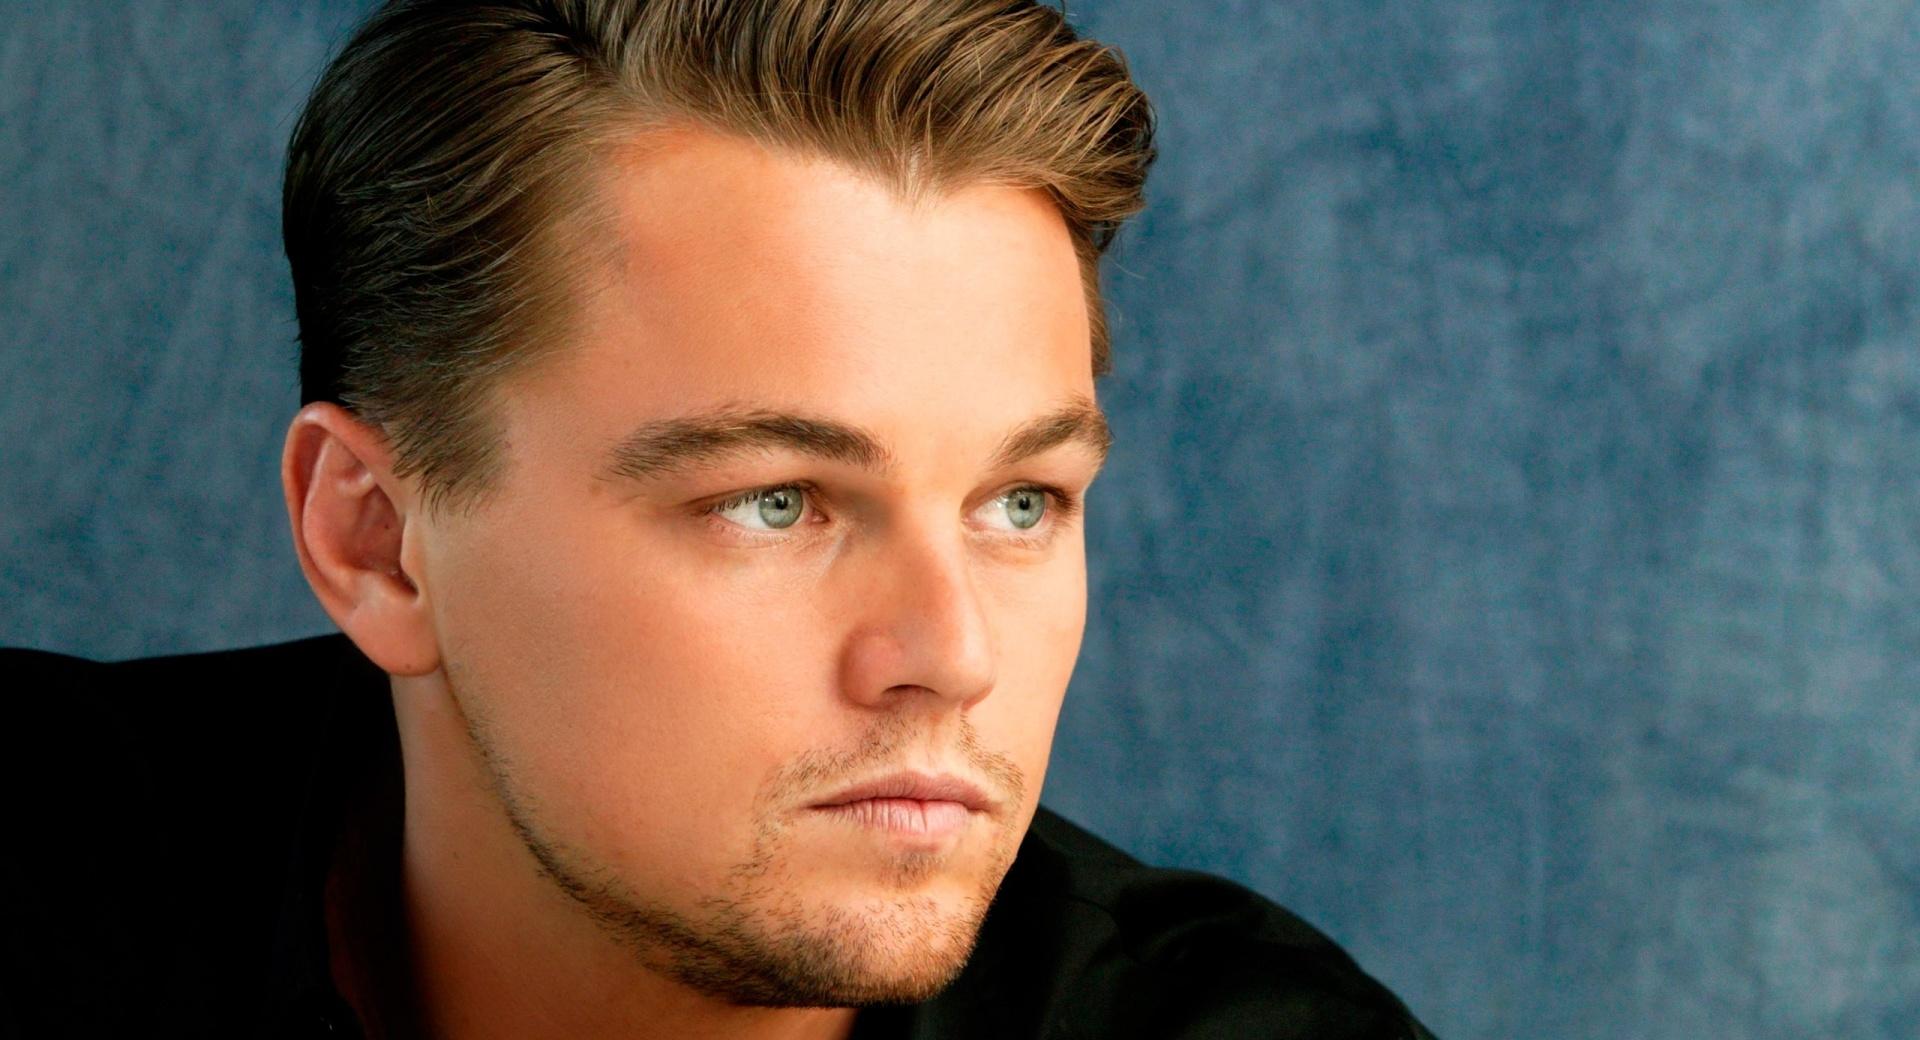 Leonardo DiCaprio Portrait at 1024 x 1024 iPad size wallpapers HD quality